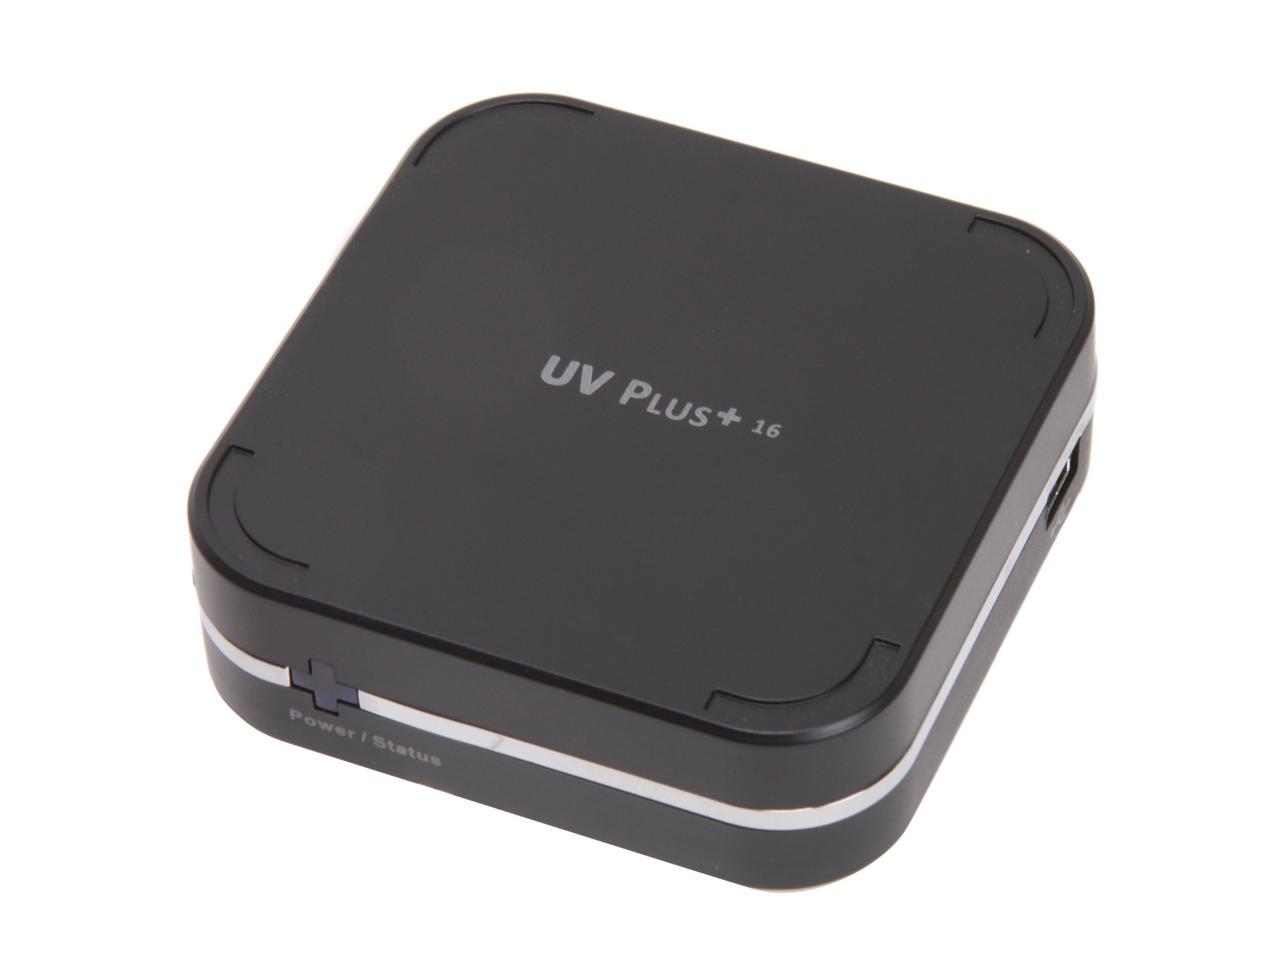 eVGA 100-U2-UV16-A1 UV Plus USB VGA Adapter - Newegg.com